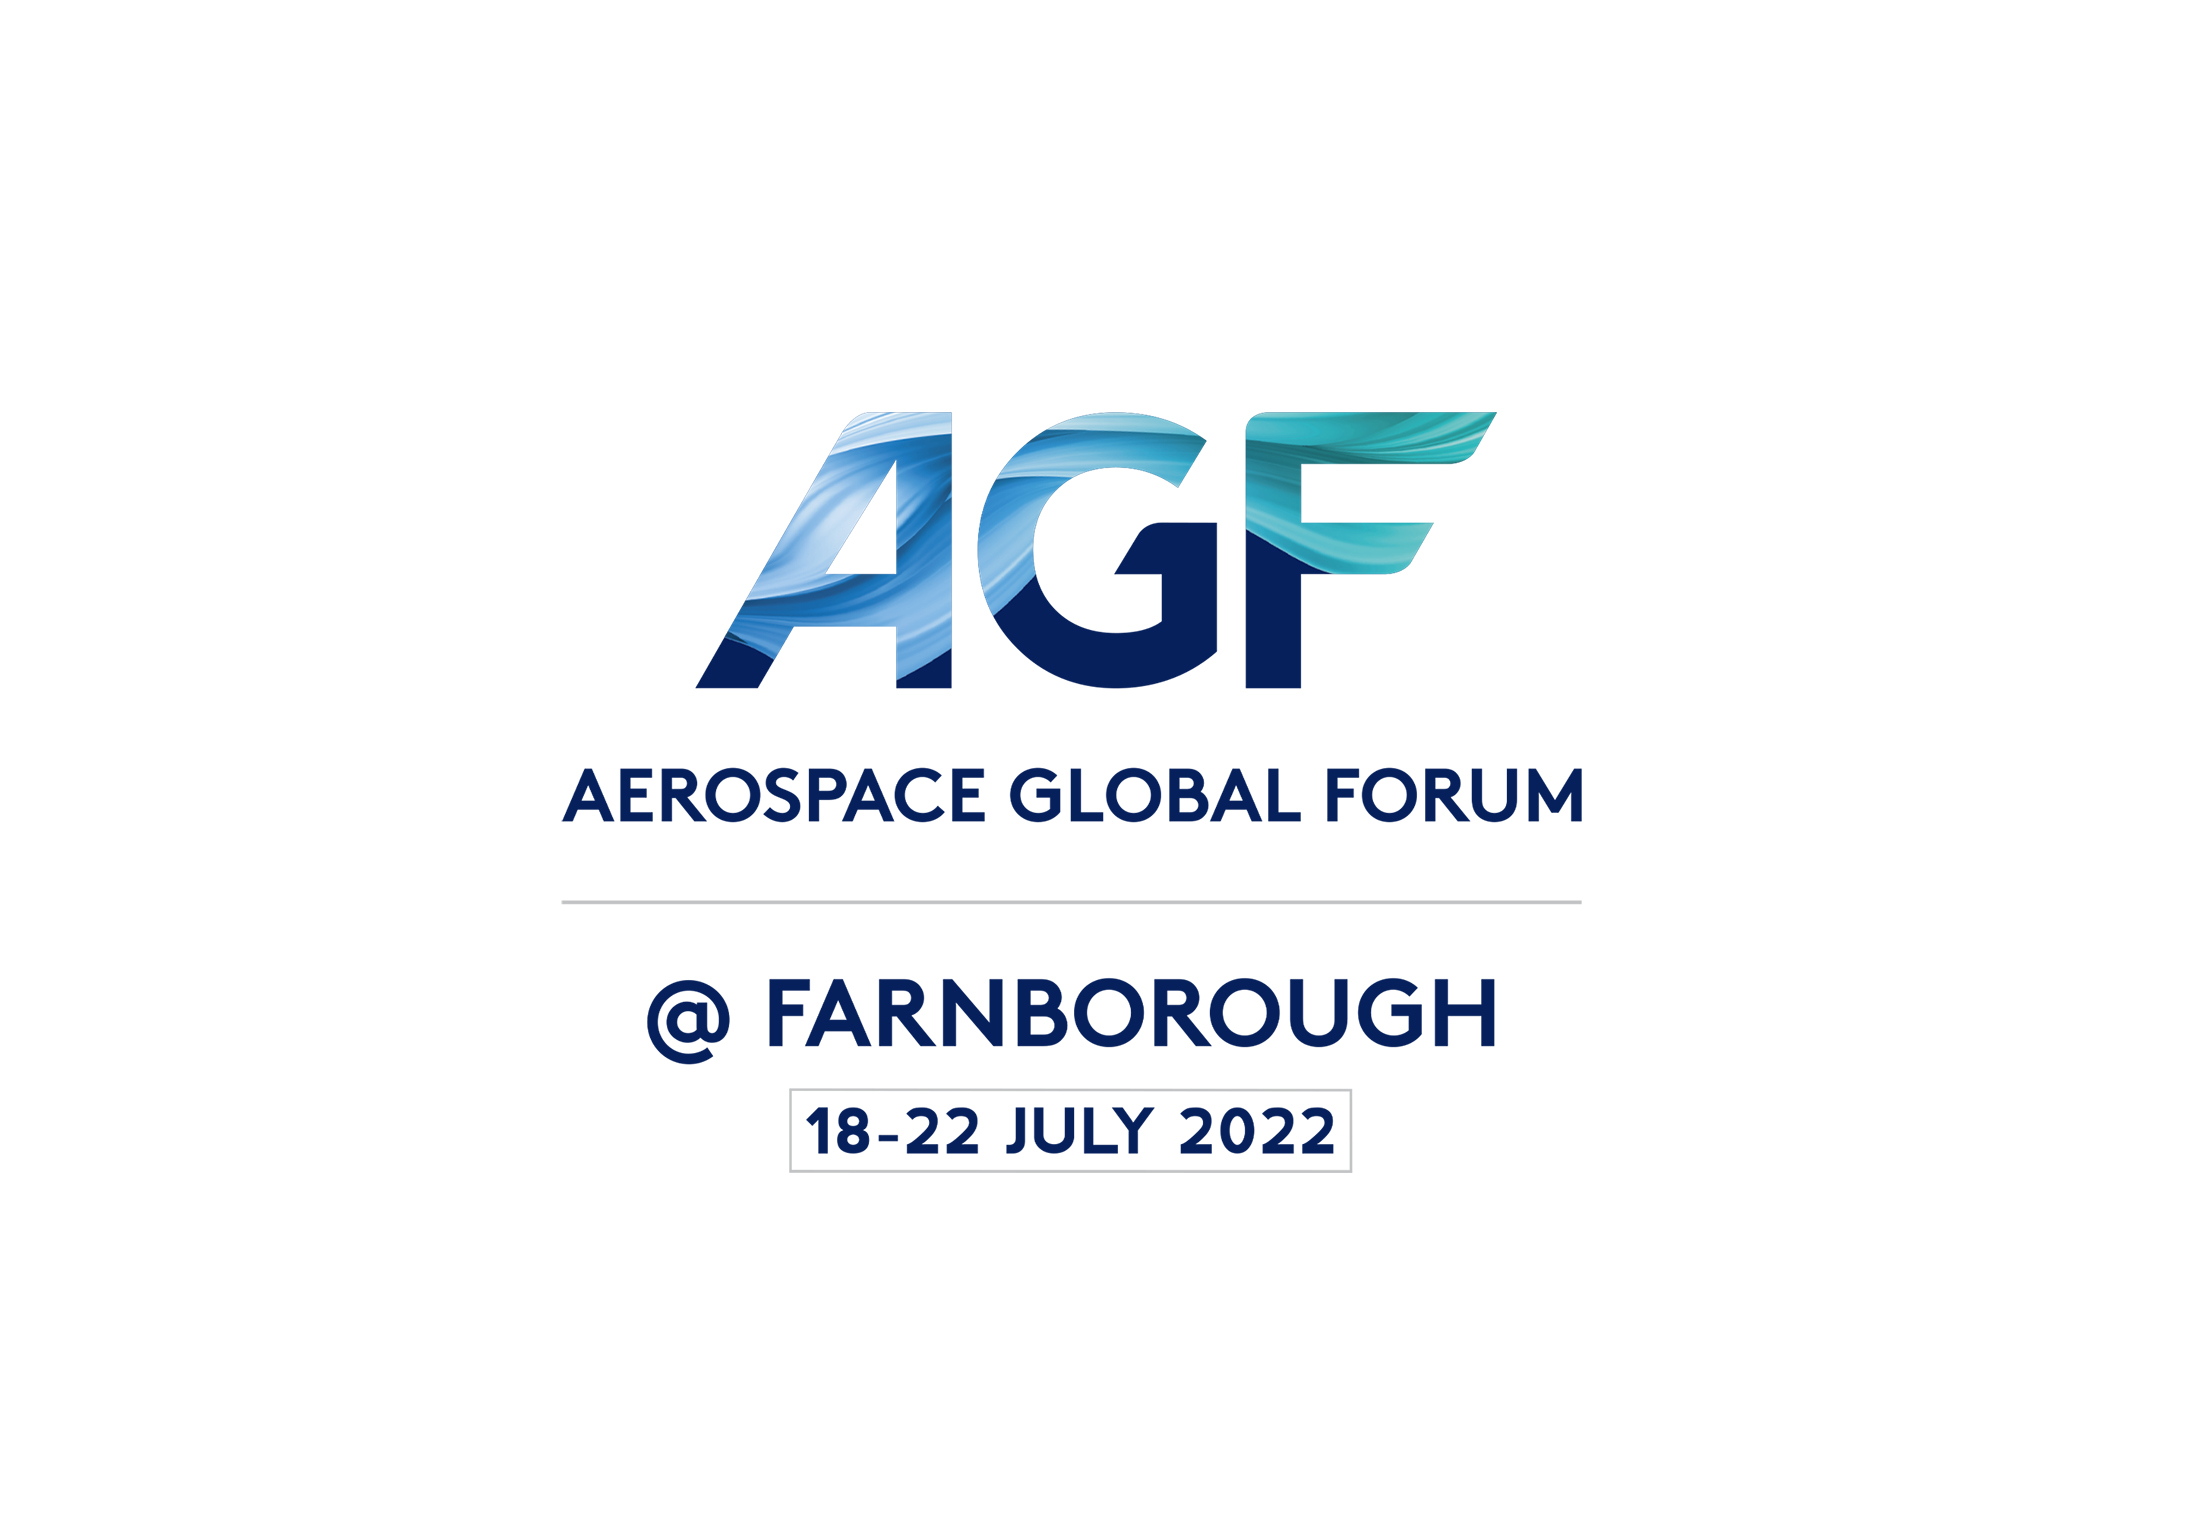 Aerospace Global Forum announces partnership with KPMG International